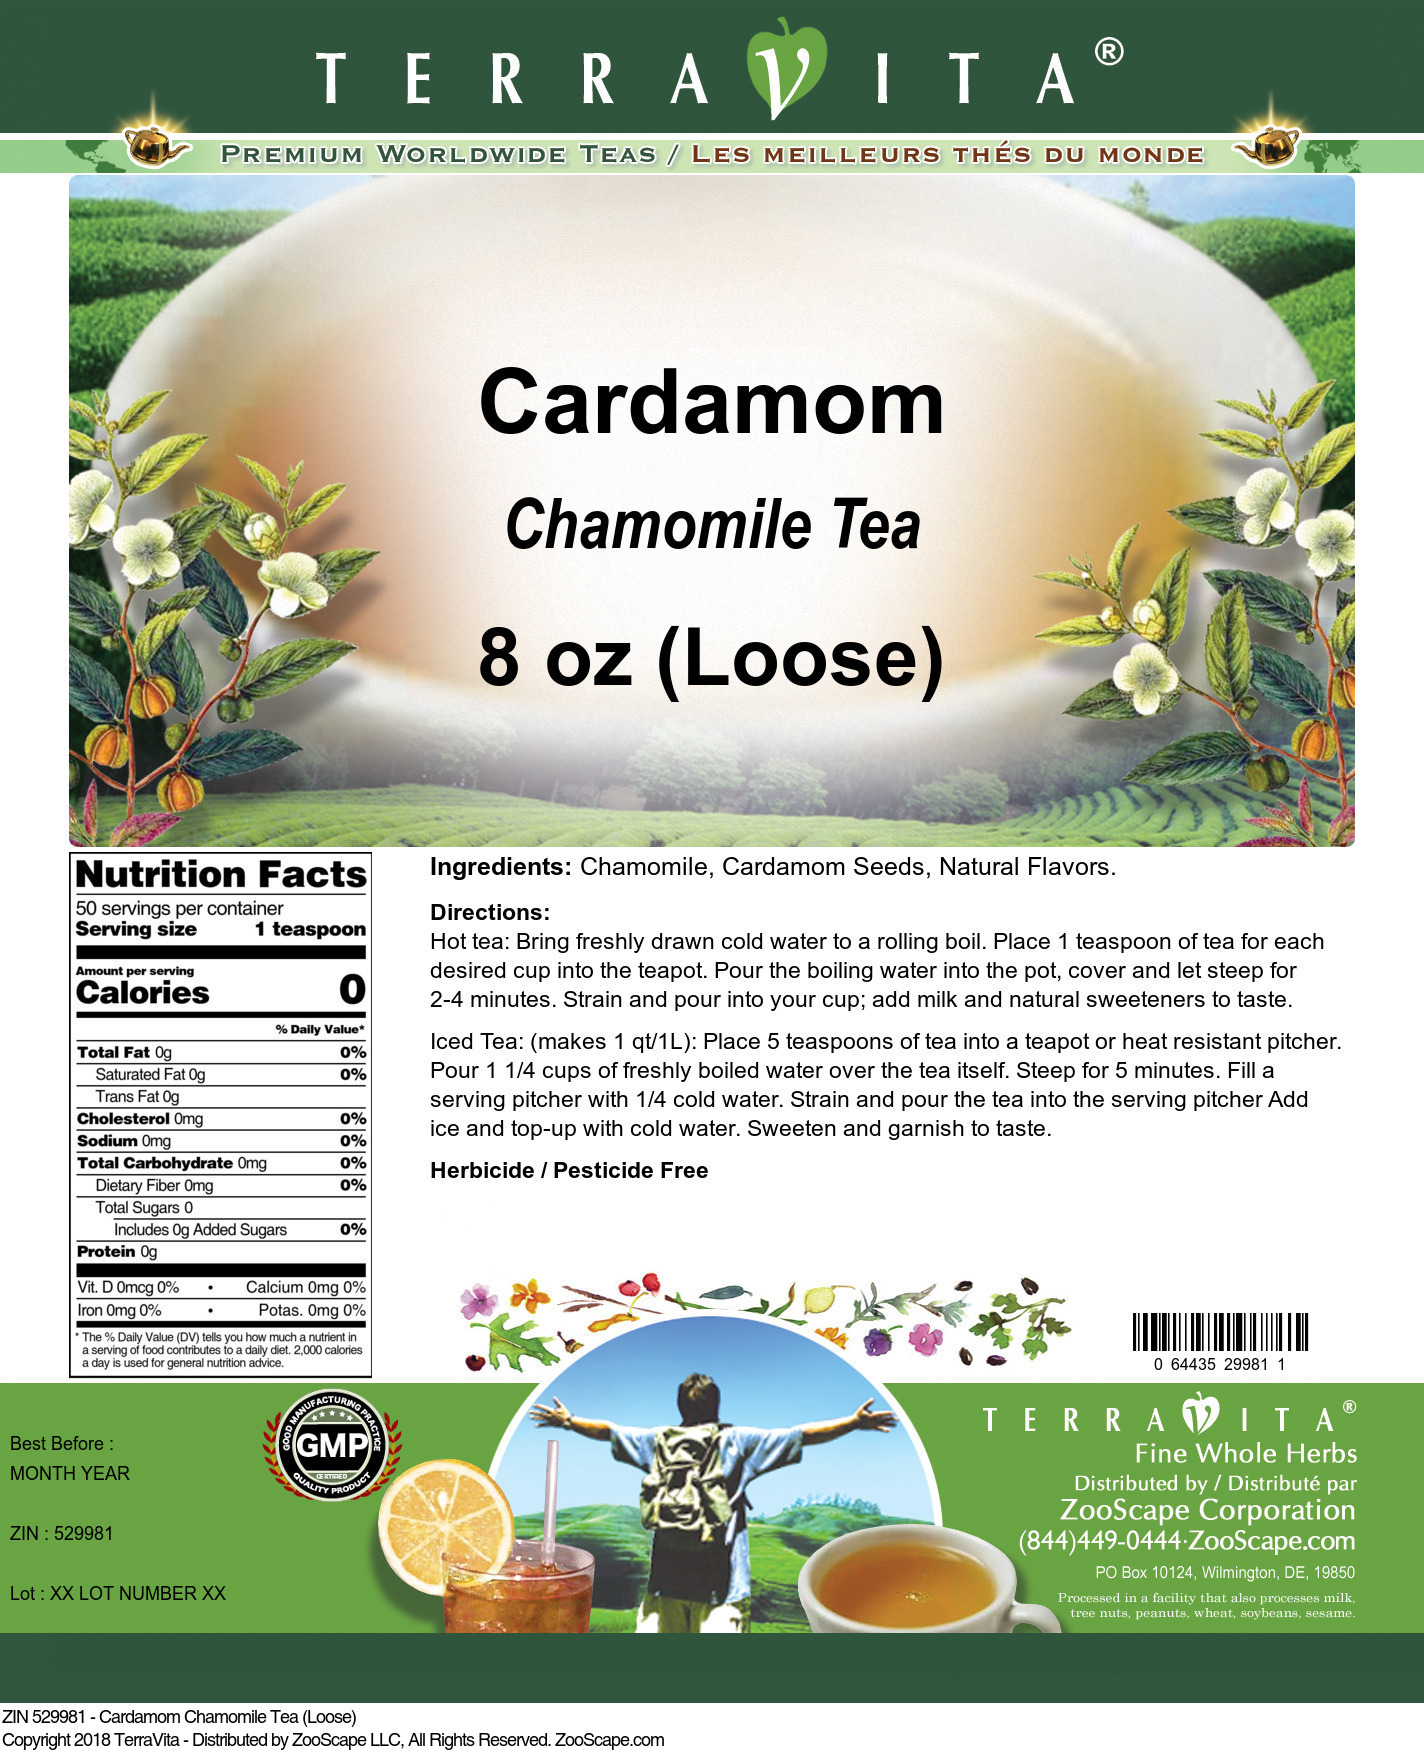 Cardamom Chamomile Tea (Loose) - Label